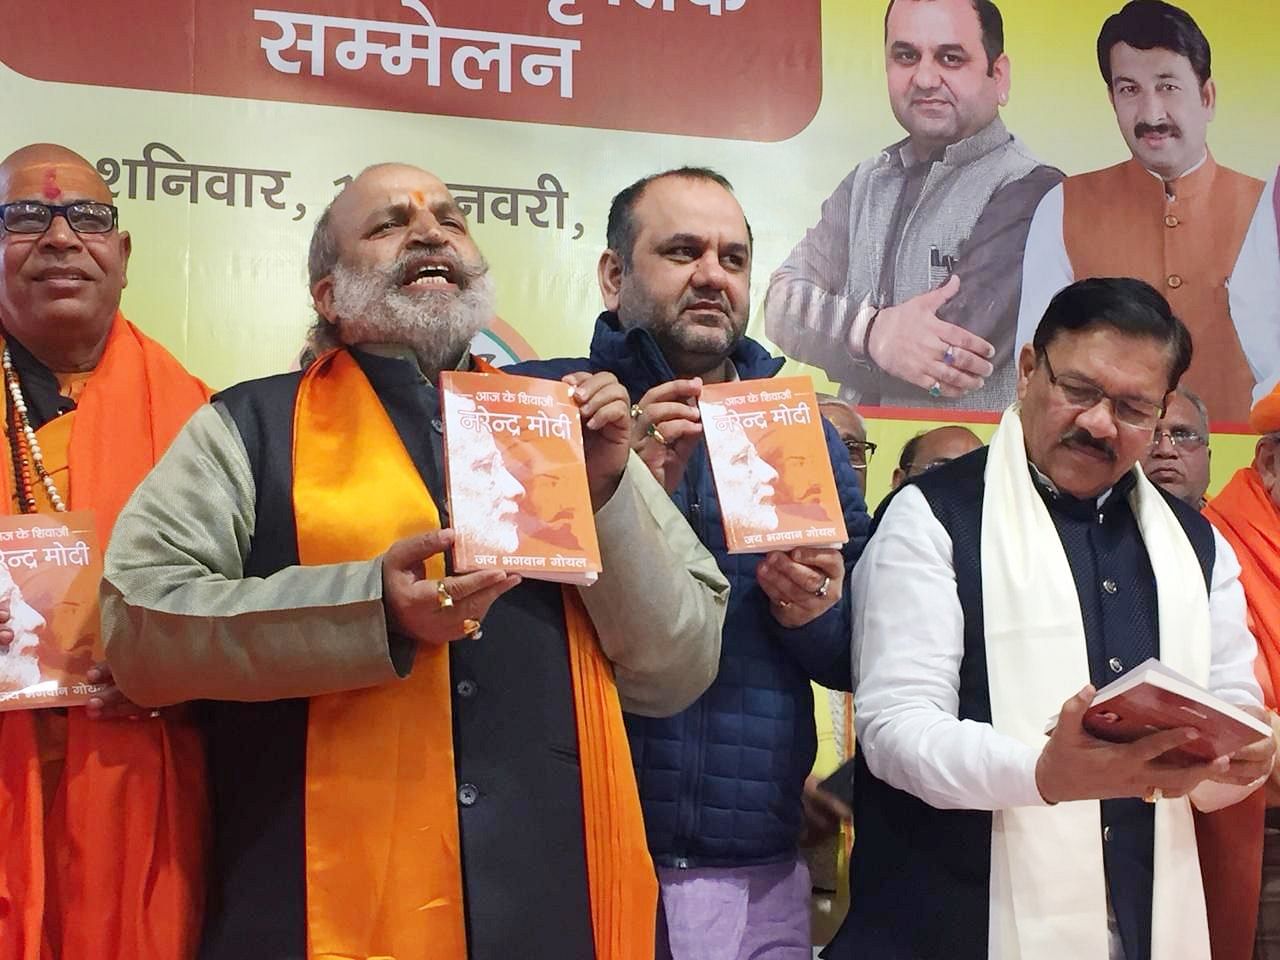 The book titled "Aaj ke Shivaji: Narendra Modi" has been written by BJP's Jay Bhagwan Goyal. (Twitter Image/@JaiBhagwanGoyal)